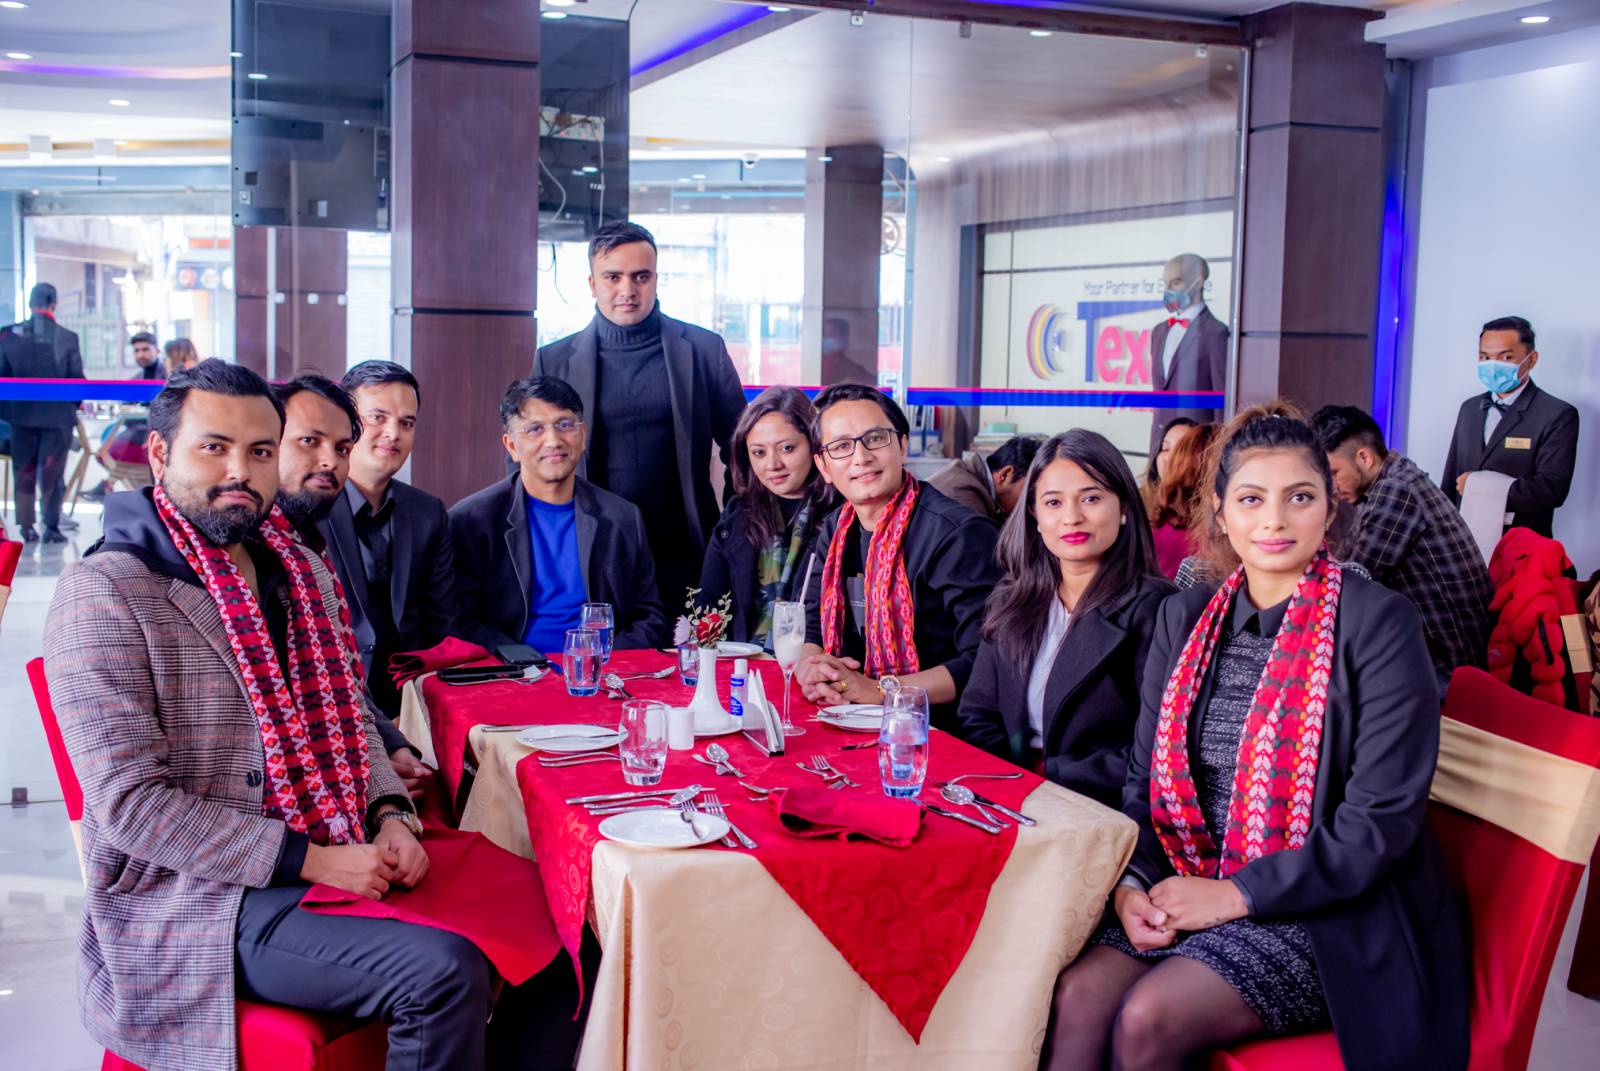 Fine Dining Training with Almoda Uprety, Saigrace Pokharel & Srita Adhikari